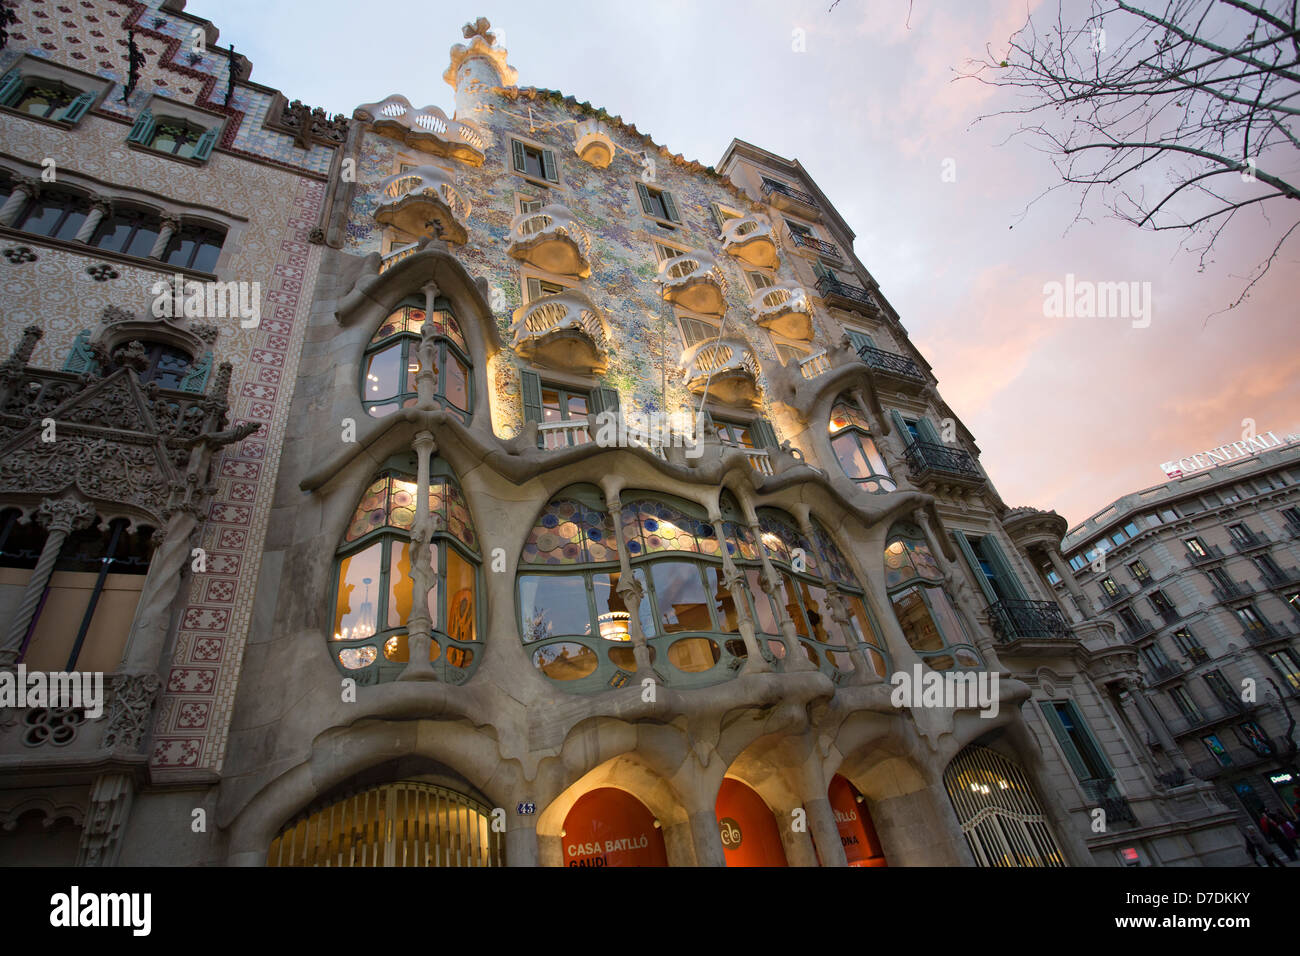 Gaudi's Casa Batlló - Barcelona, Spain. Stock Photo